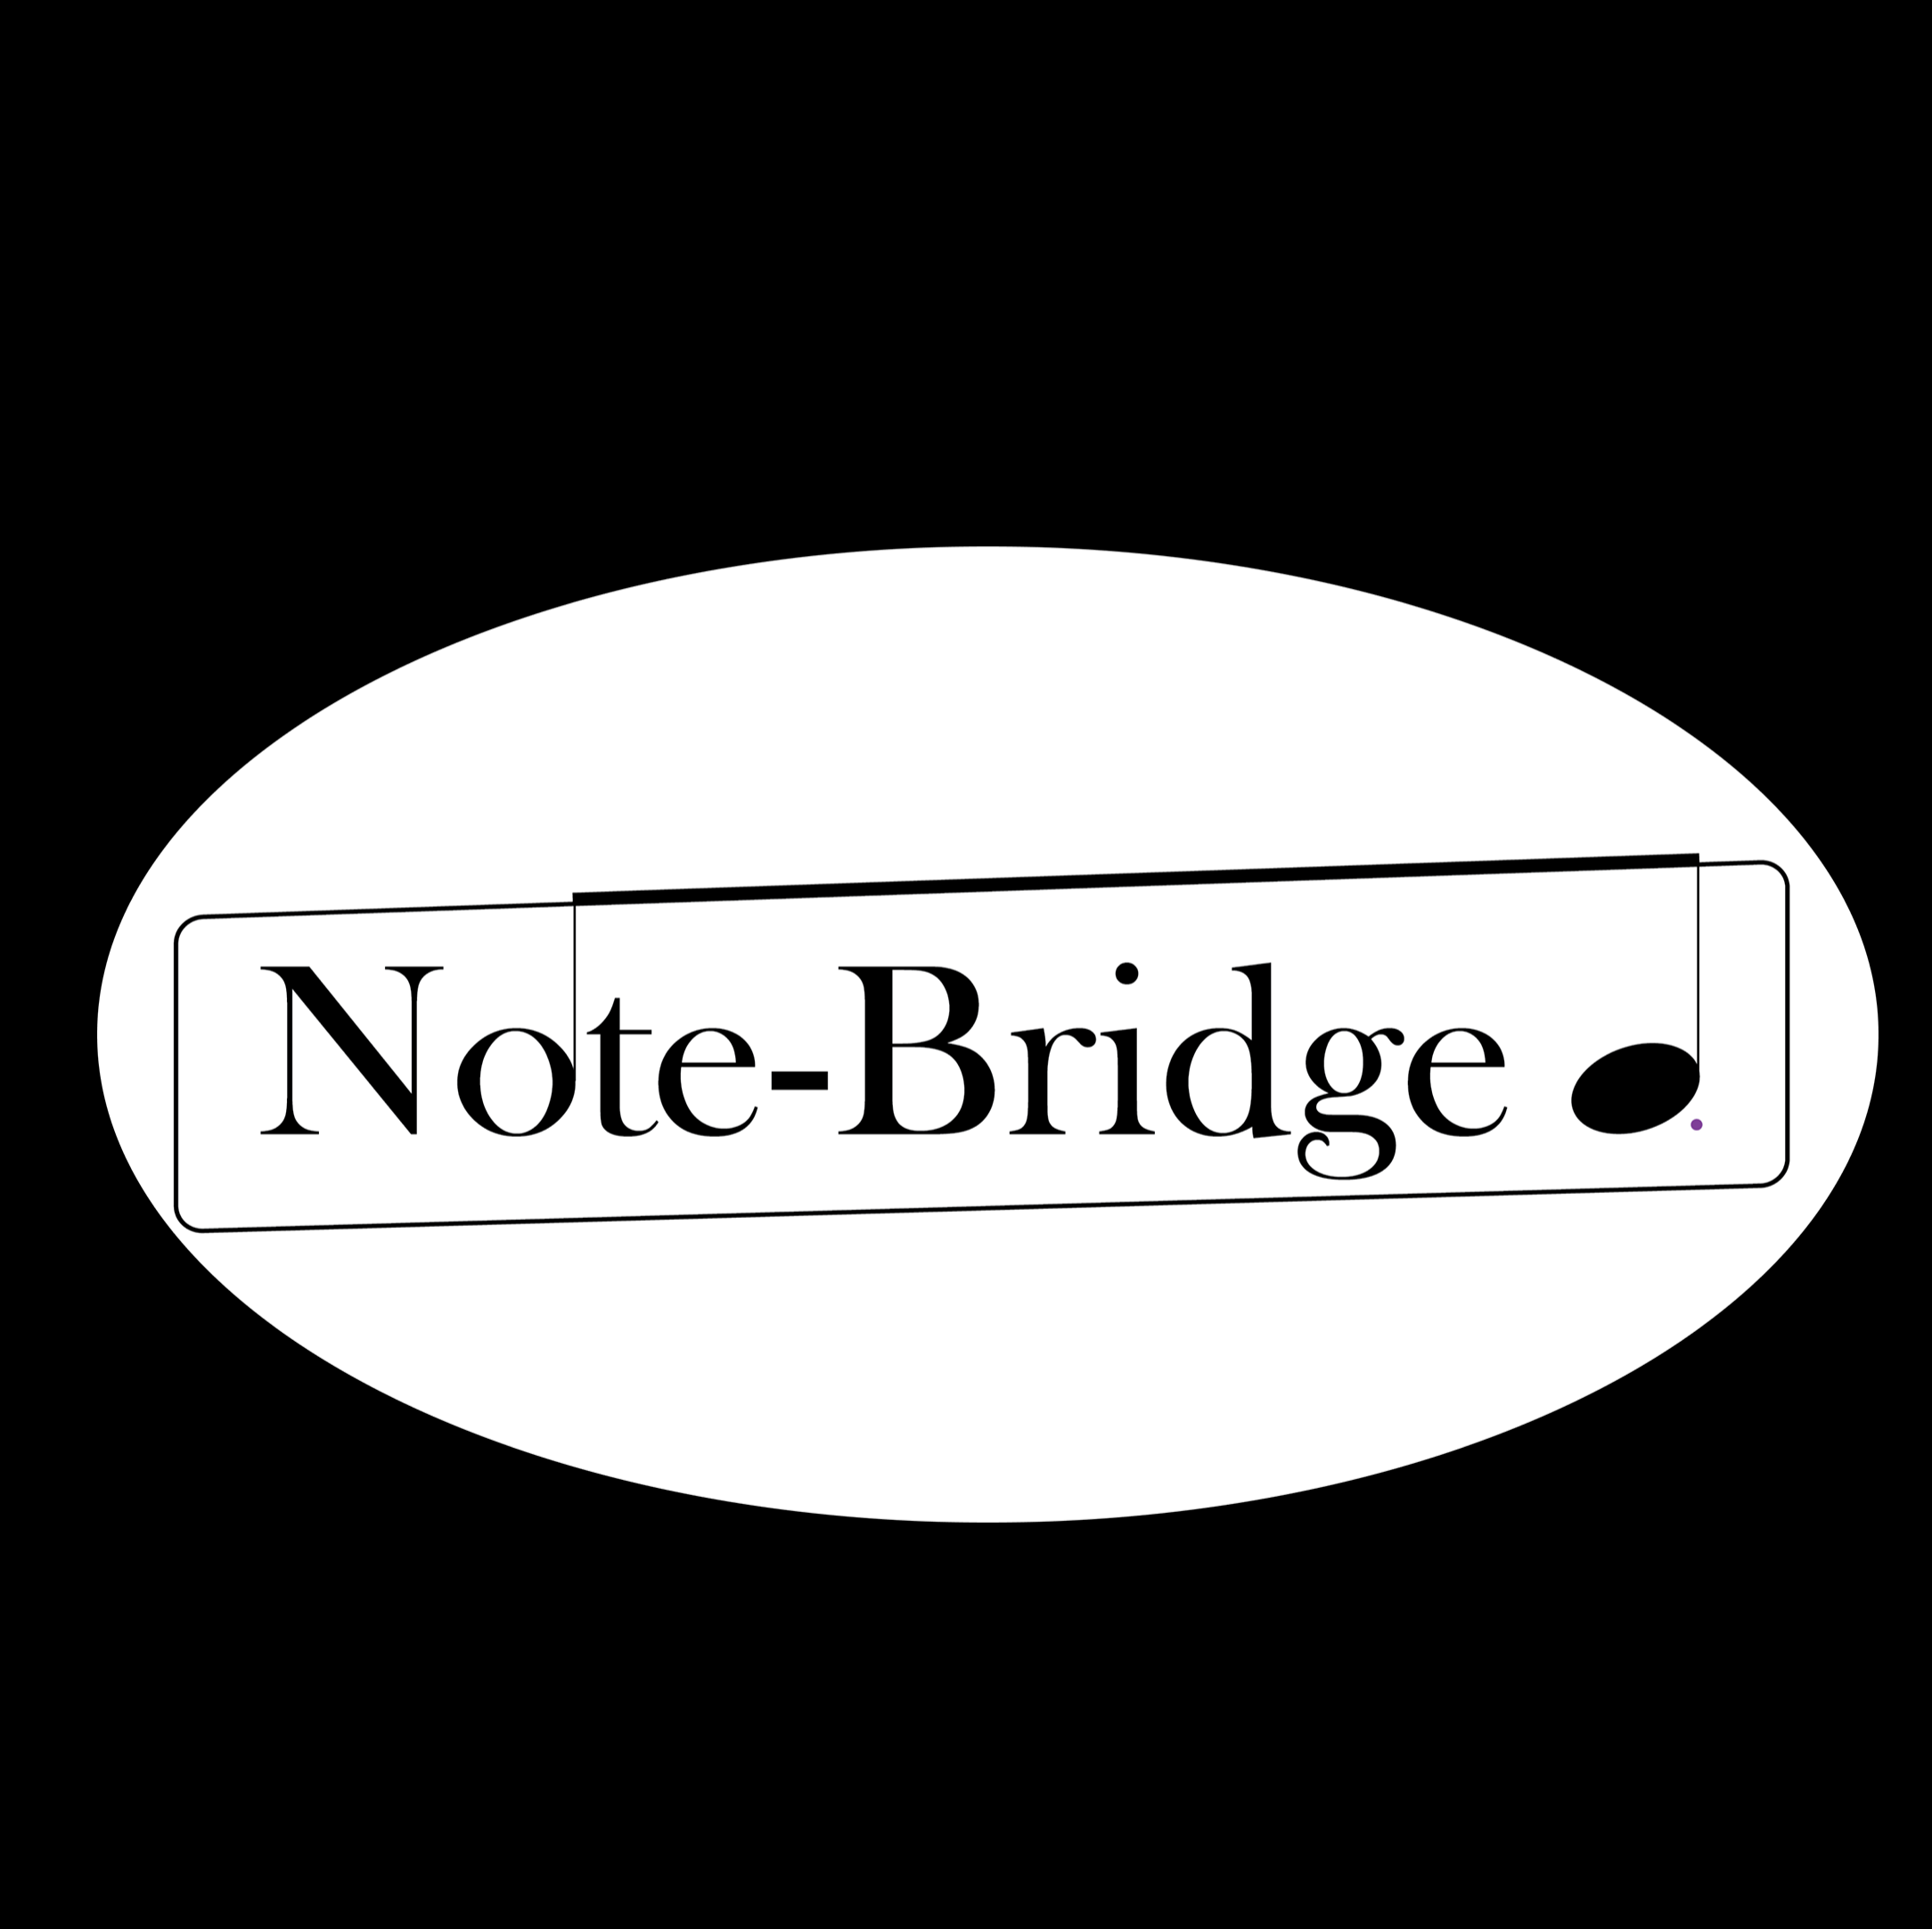 Note-Bridge